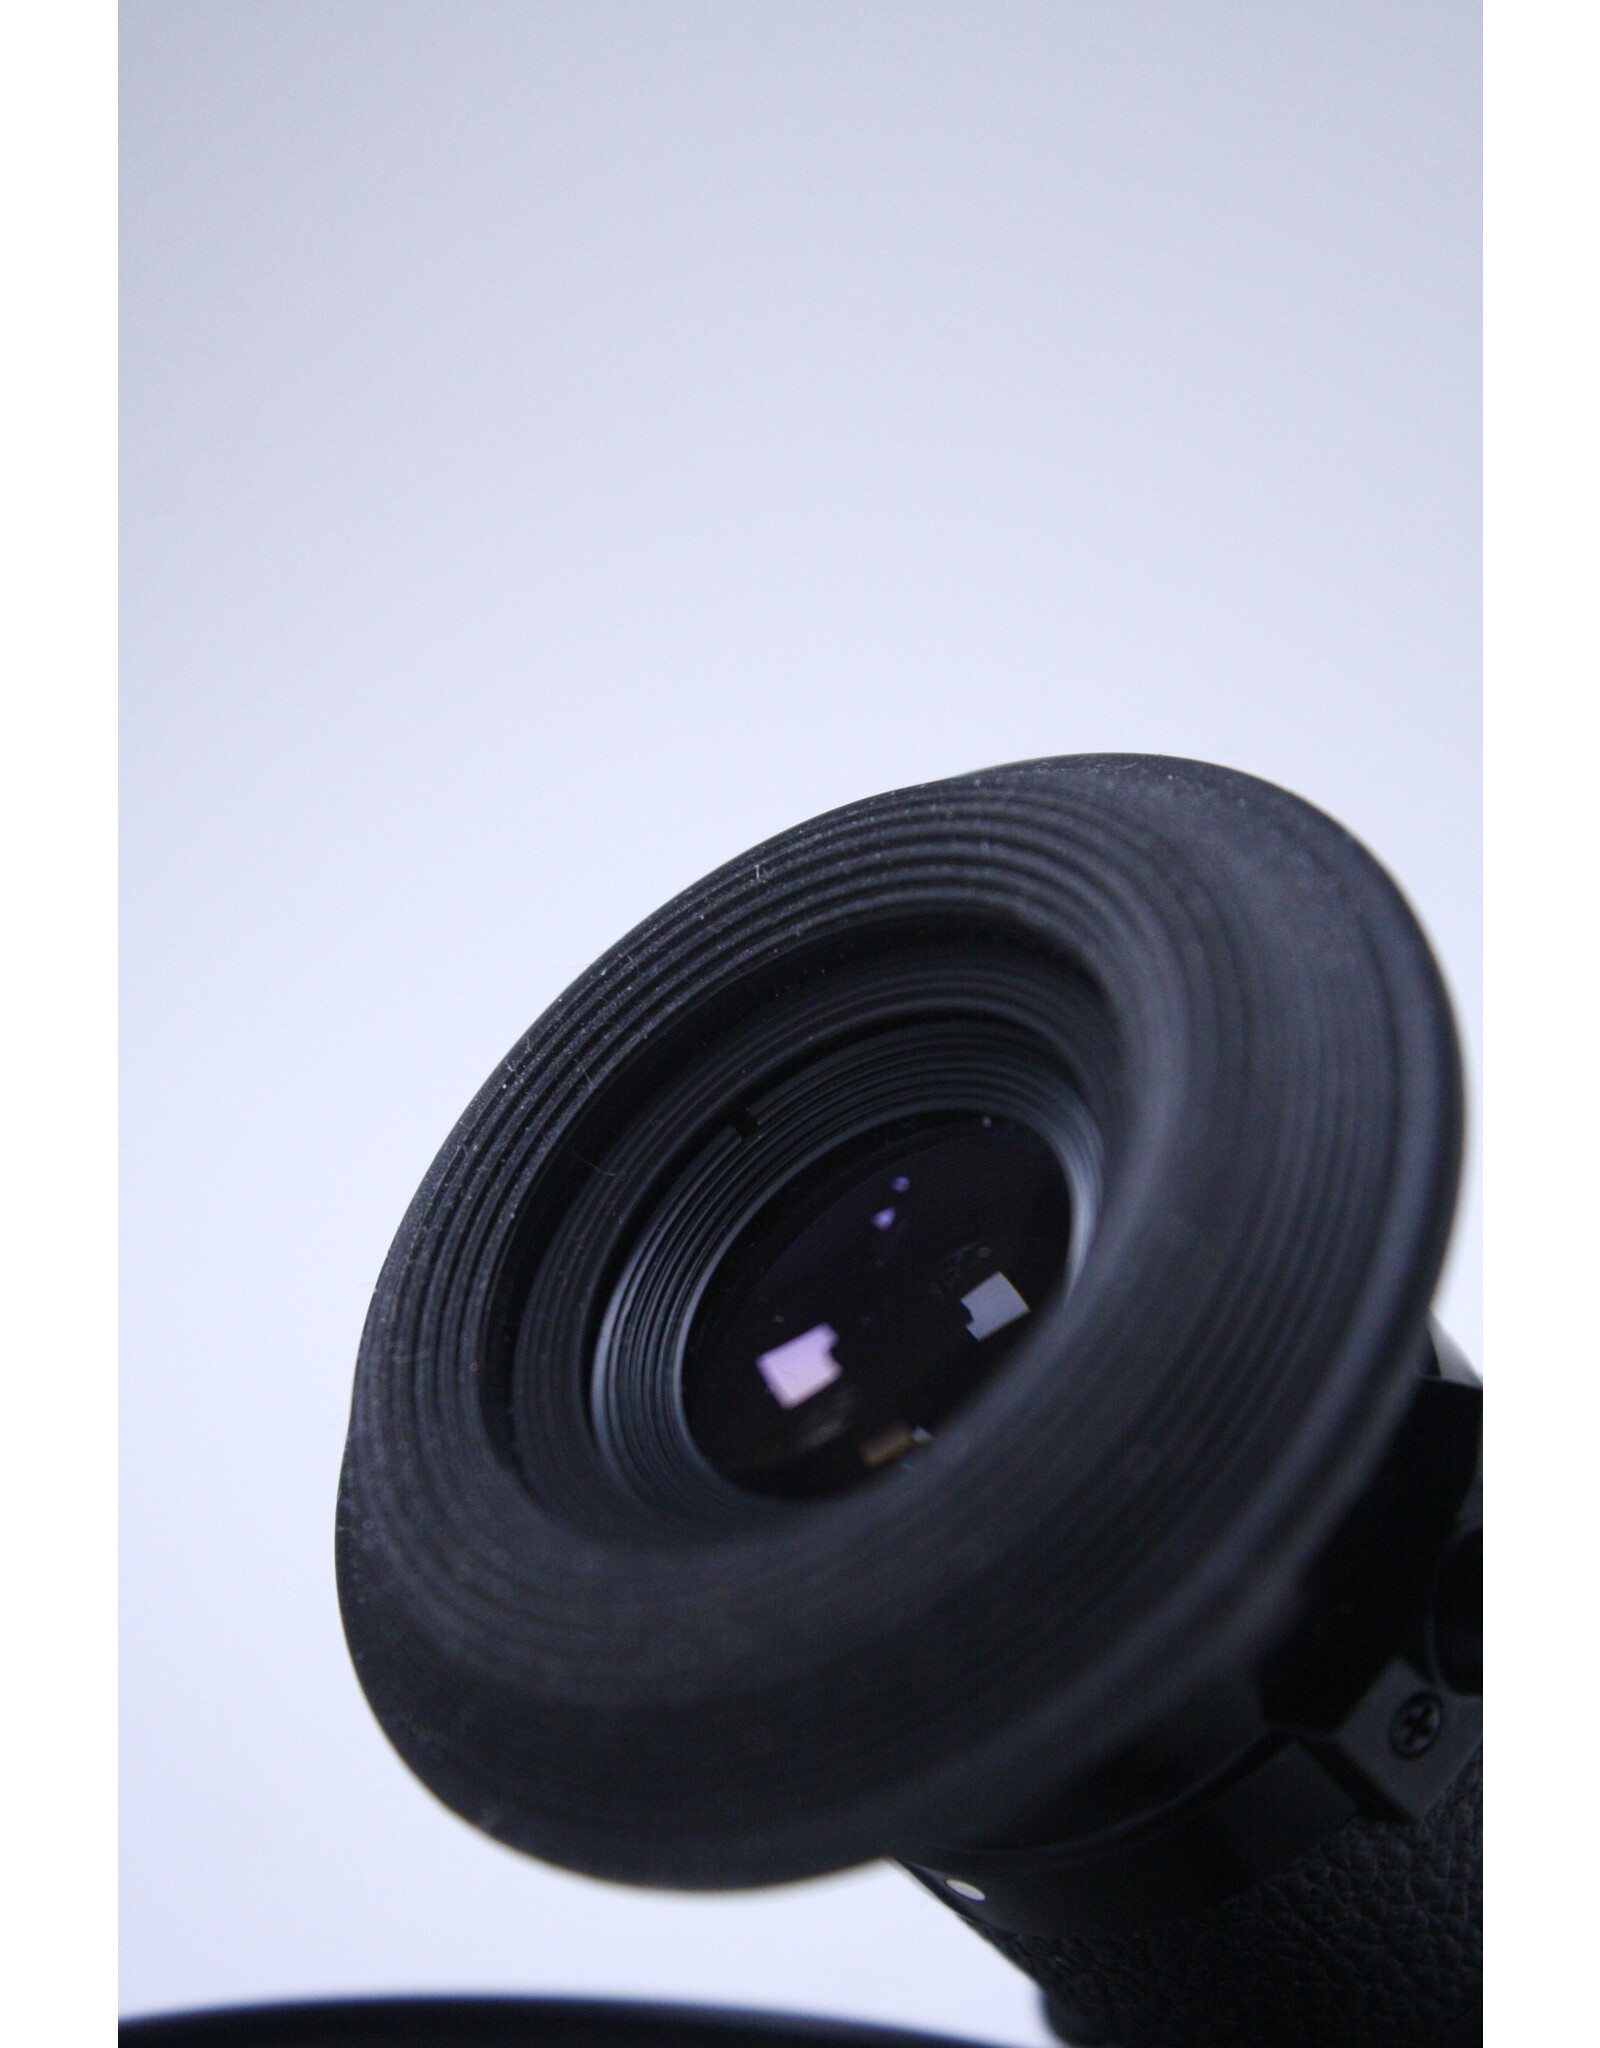 Nikon Nikon DR-3 Right Angle View Finder For Nikon SLR (Pre-owned)